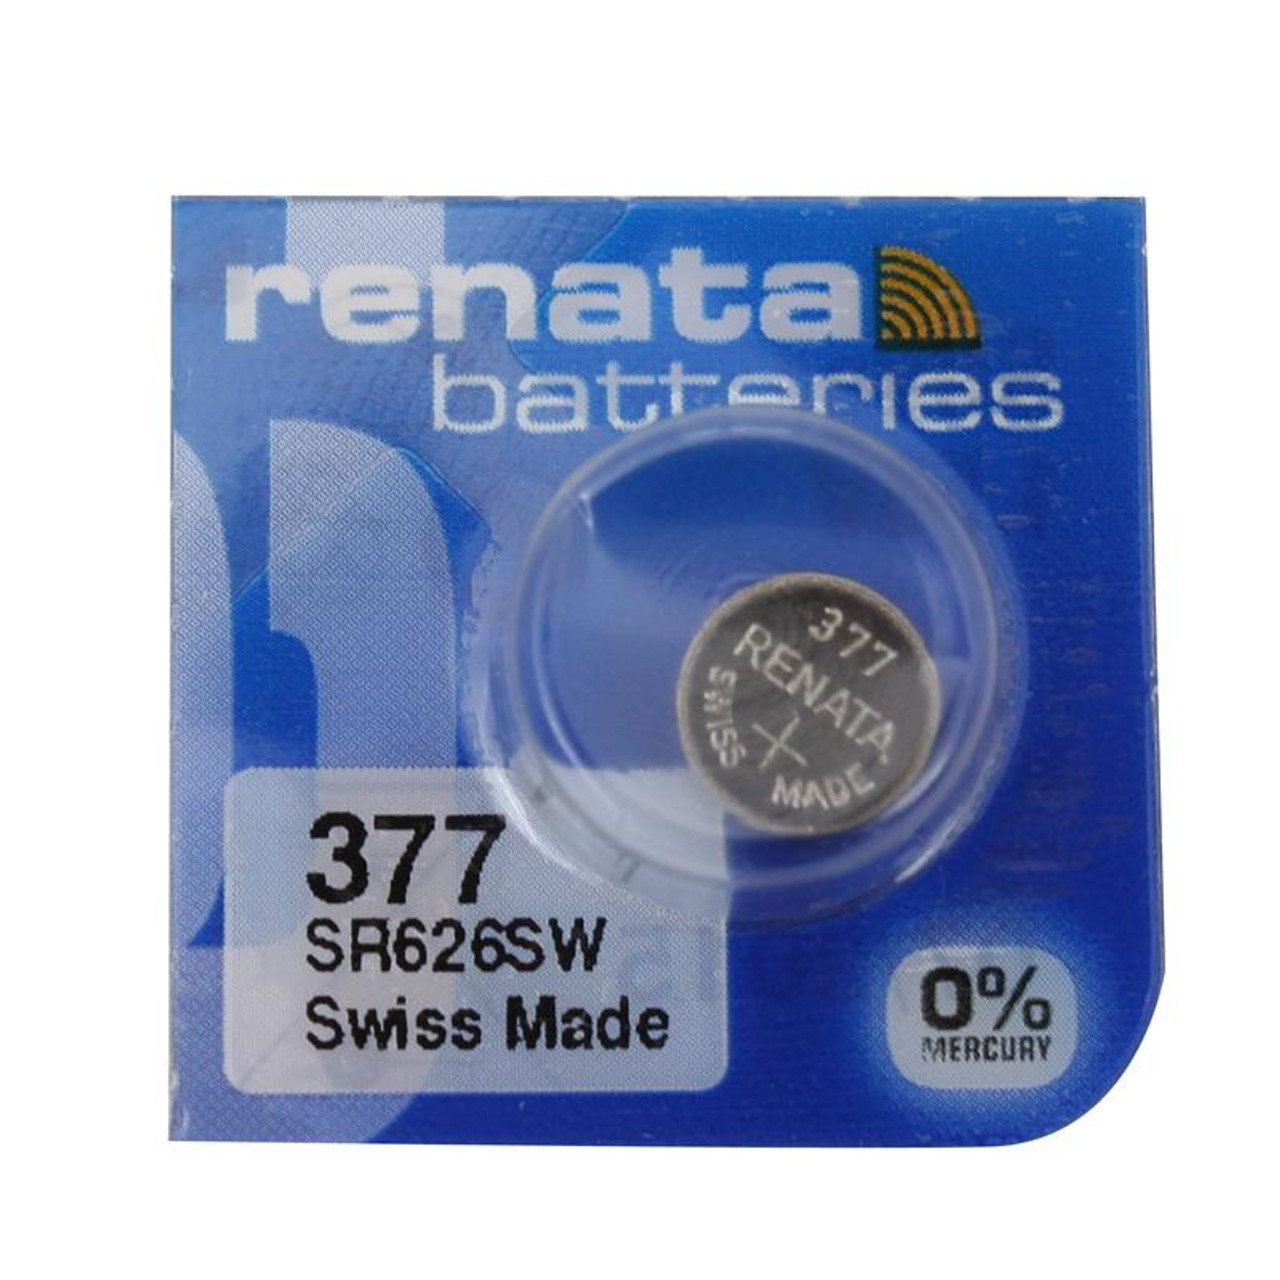 Sr626sw Battery Conversion Chart